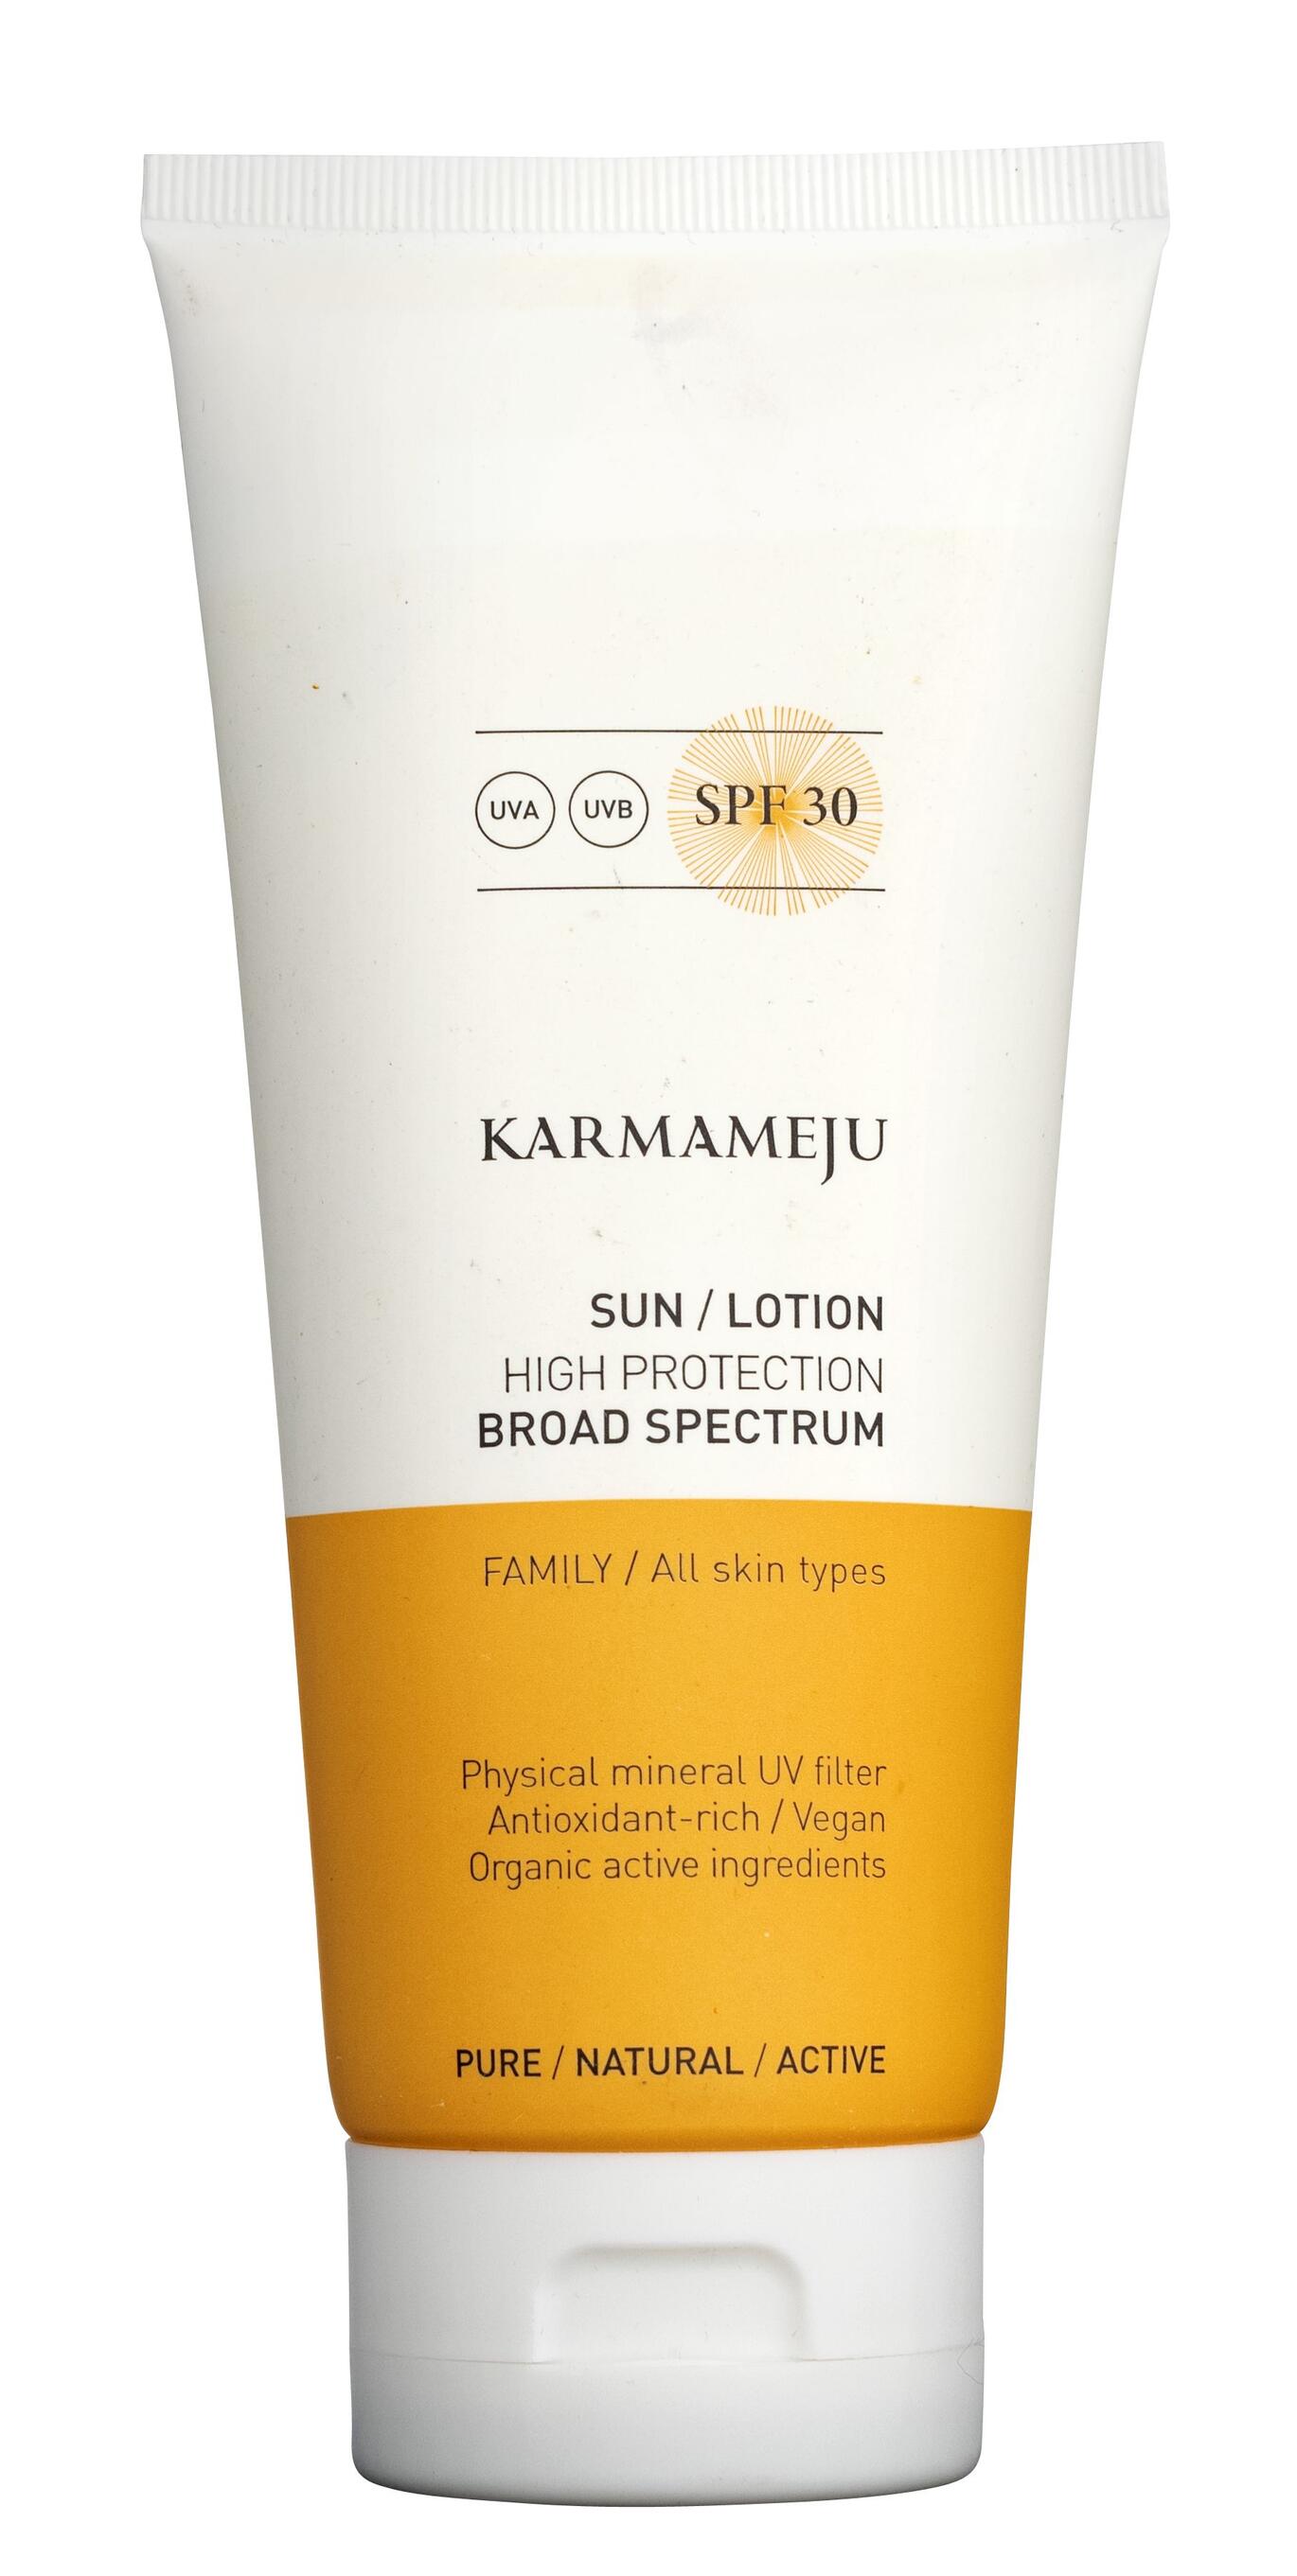 Sun / Lotion SPF 30 Karmameju